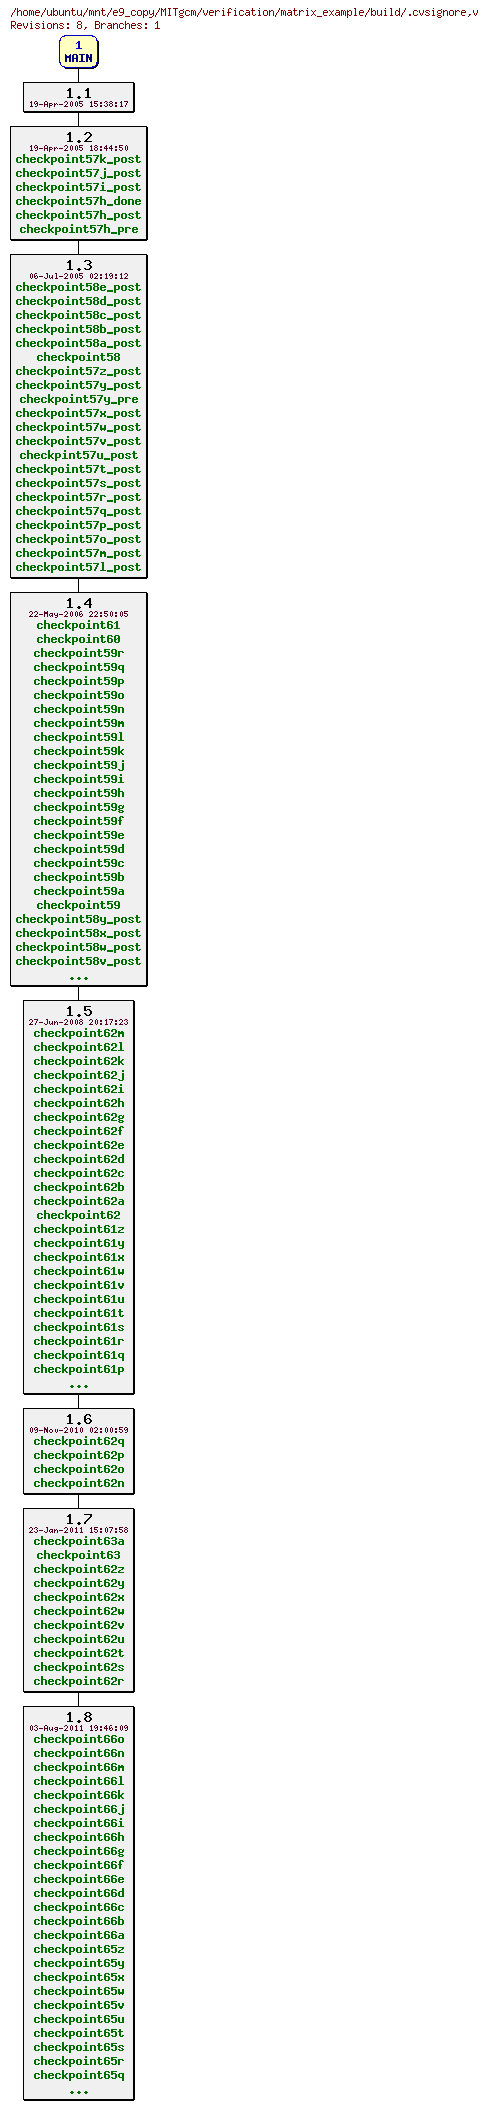 Revisions of MITgcm/verification/matrix_example/build/.cvsignore